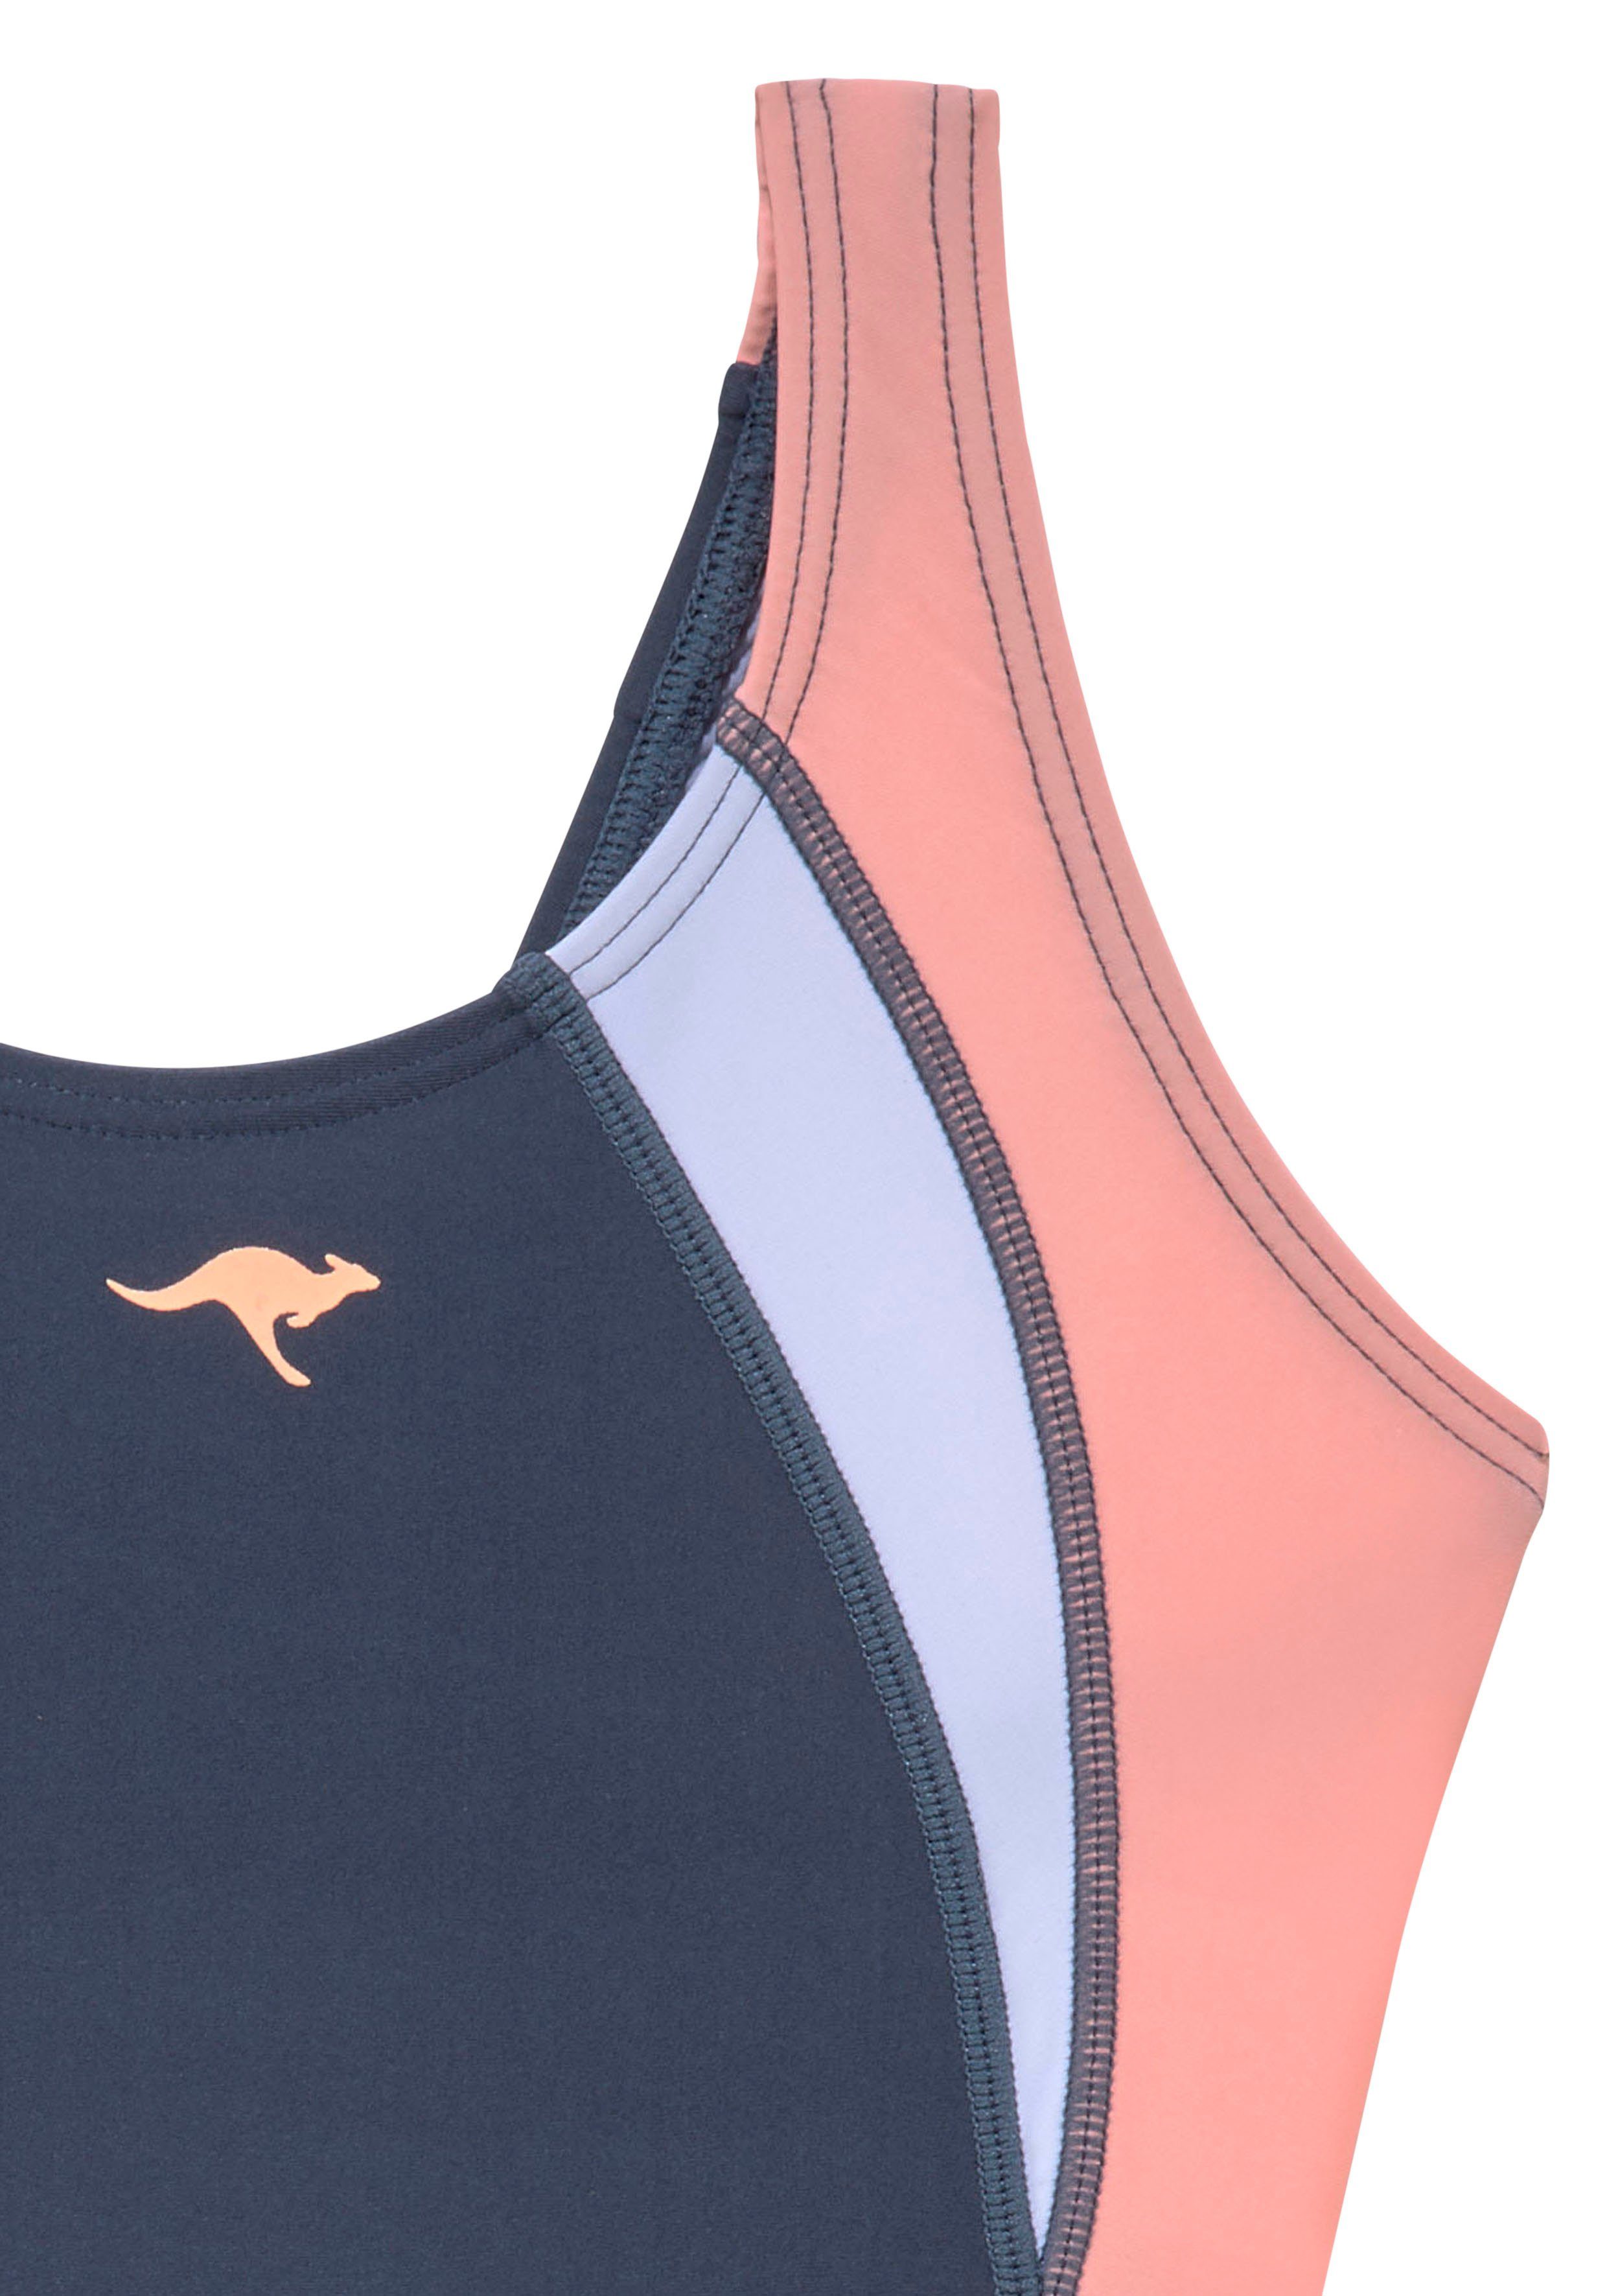 KangaROOS sportlichen Farbmix rauchblau-hummer im Badeanzug